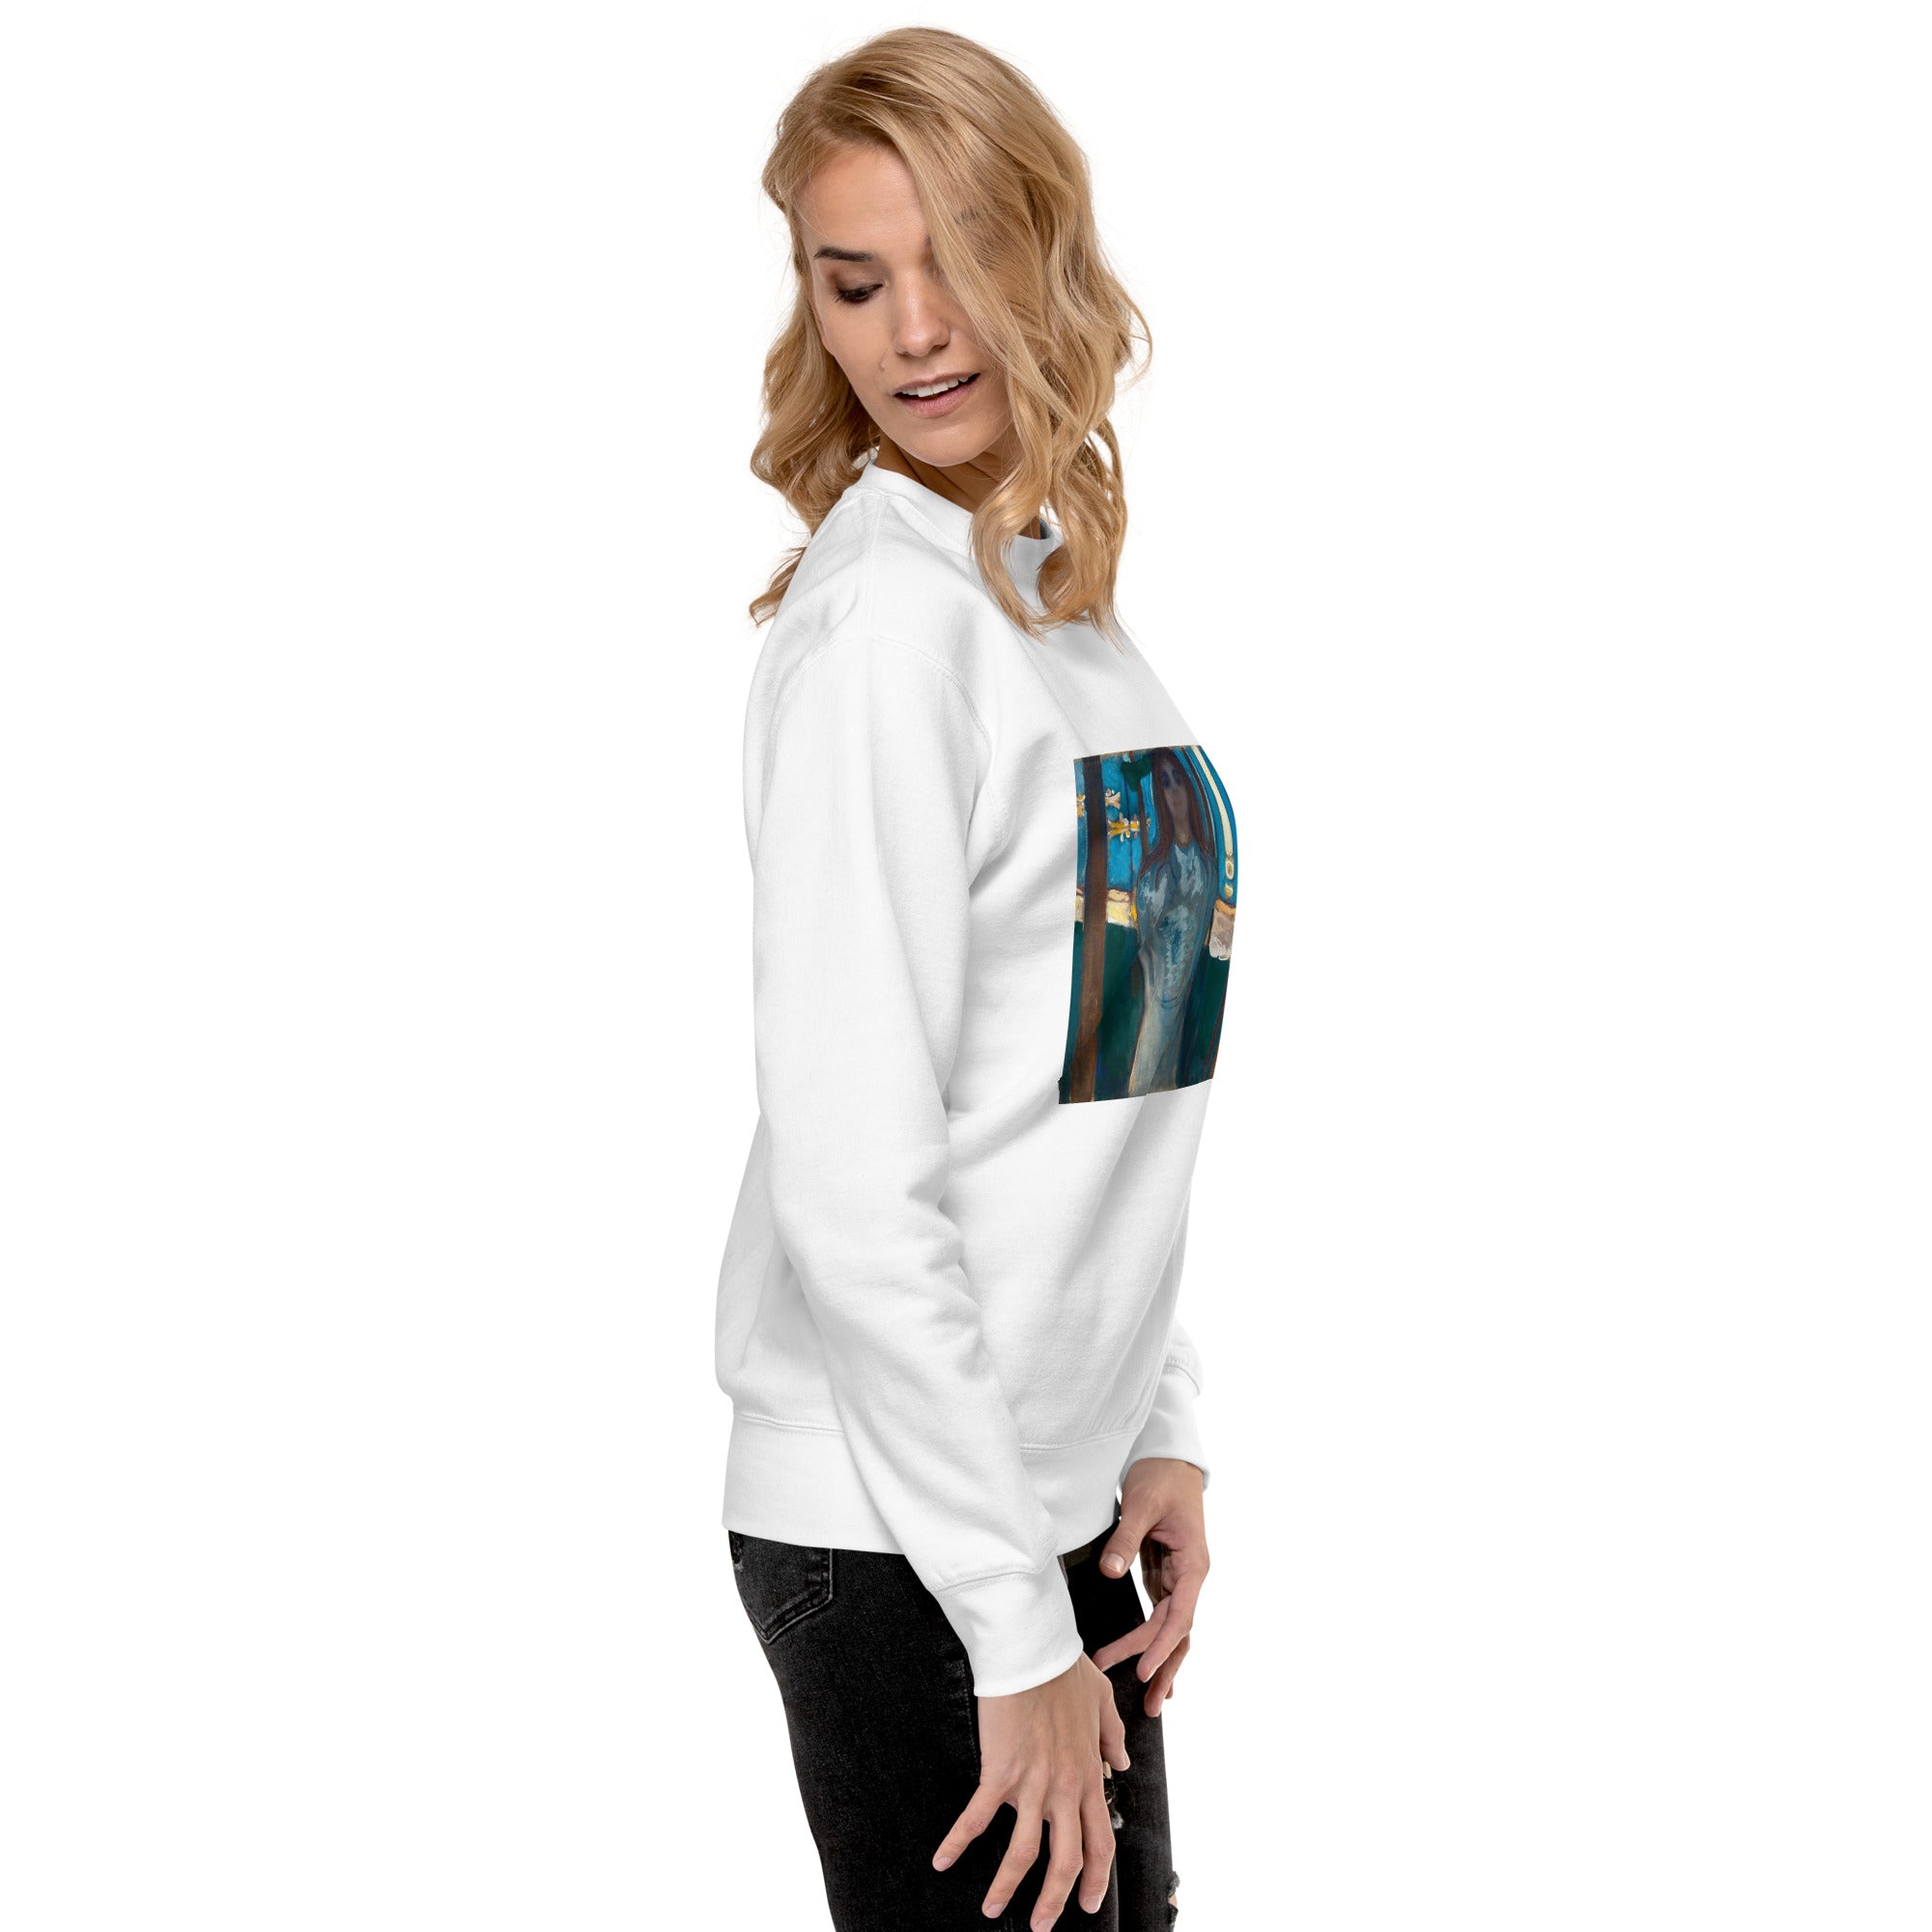 Edvard Munch 'The Voice, Summer Night' Famous Painting Sweatshirt | Unisex Premium Sweatshirt